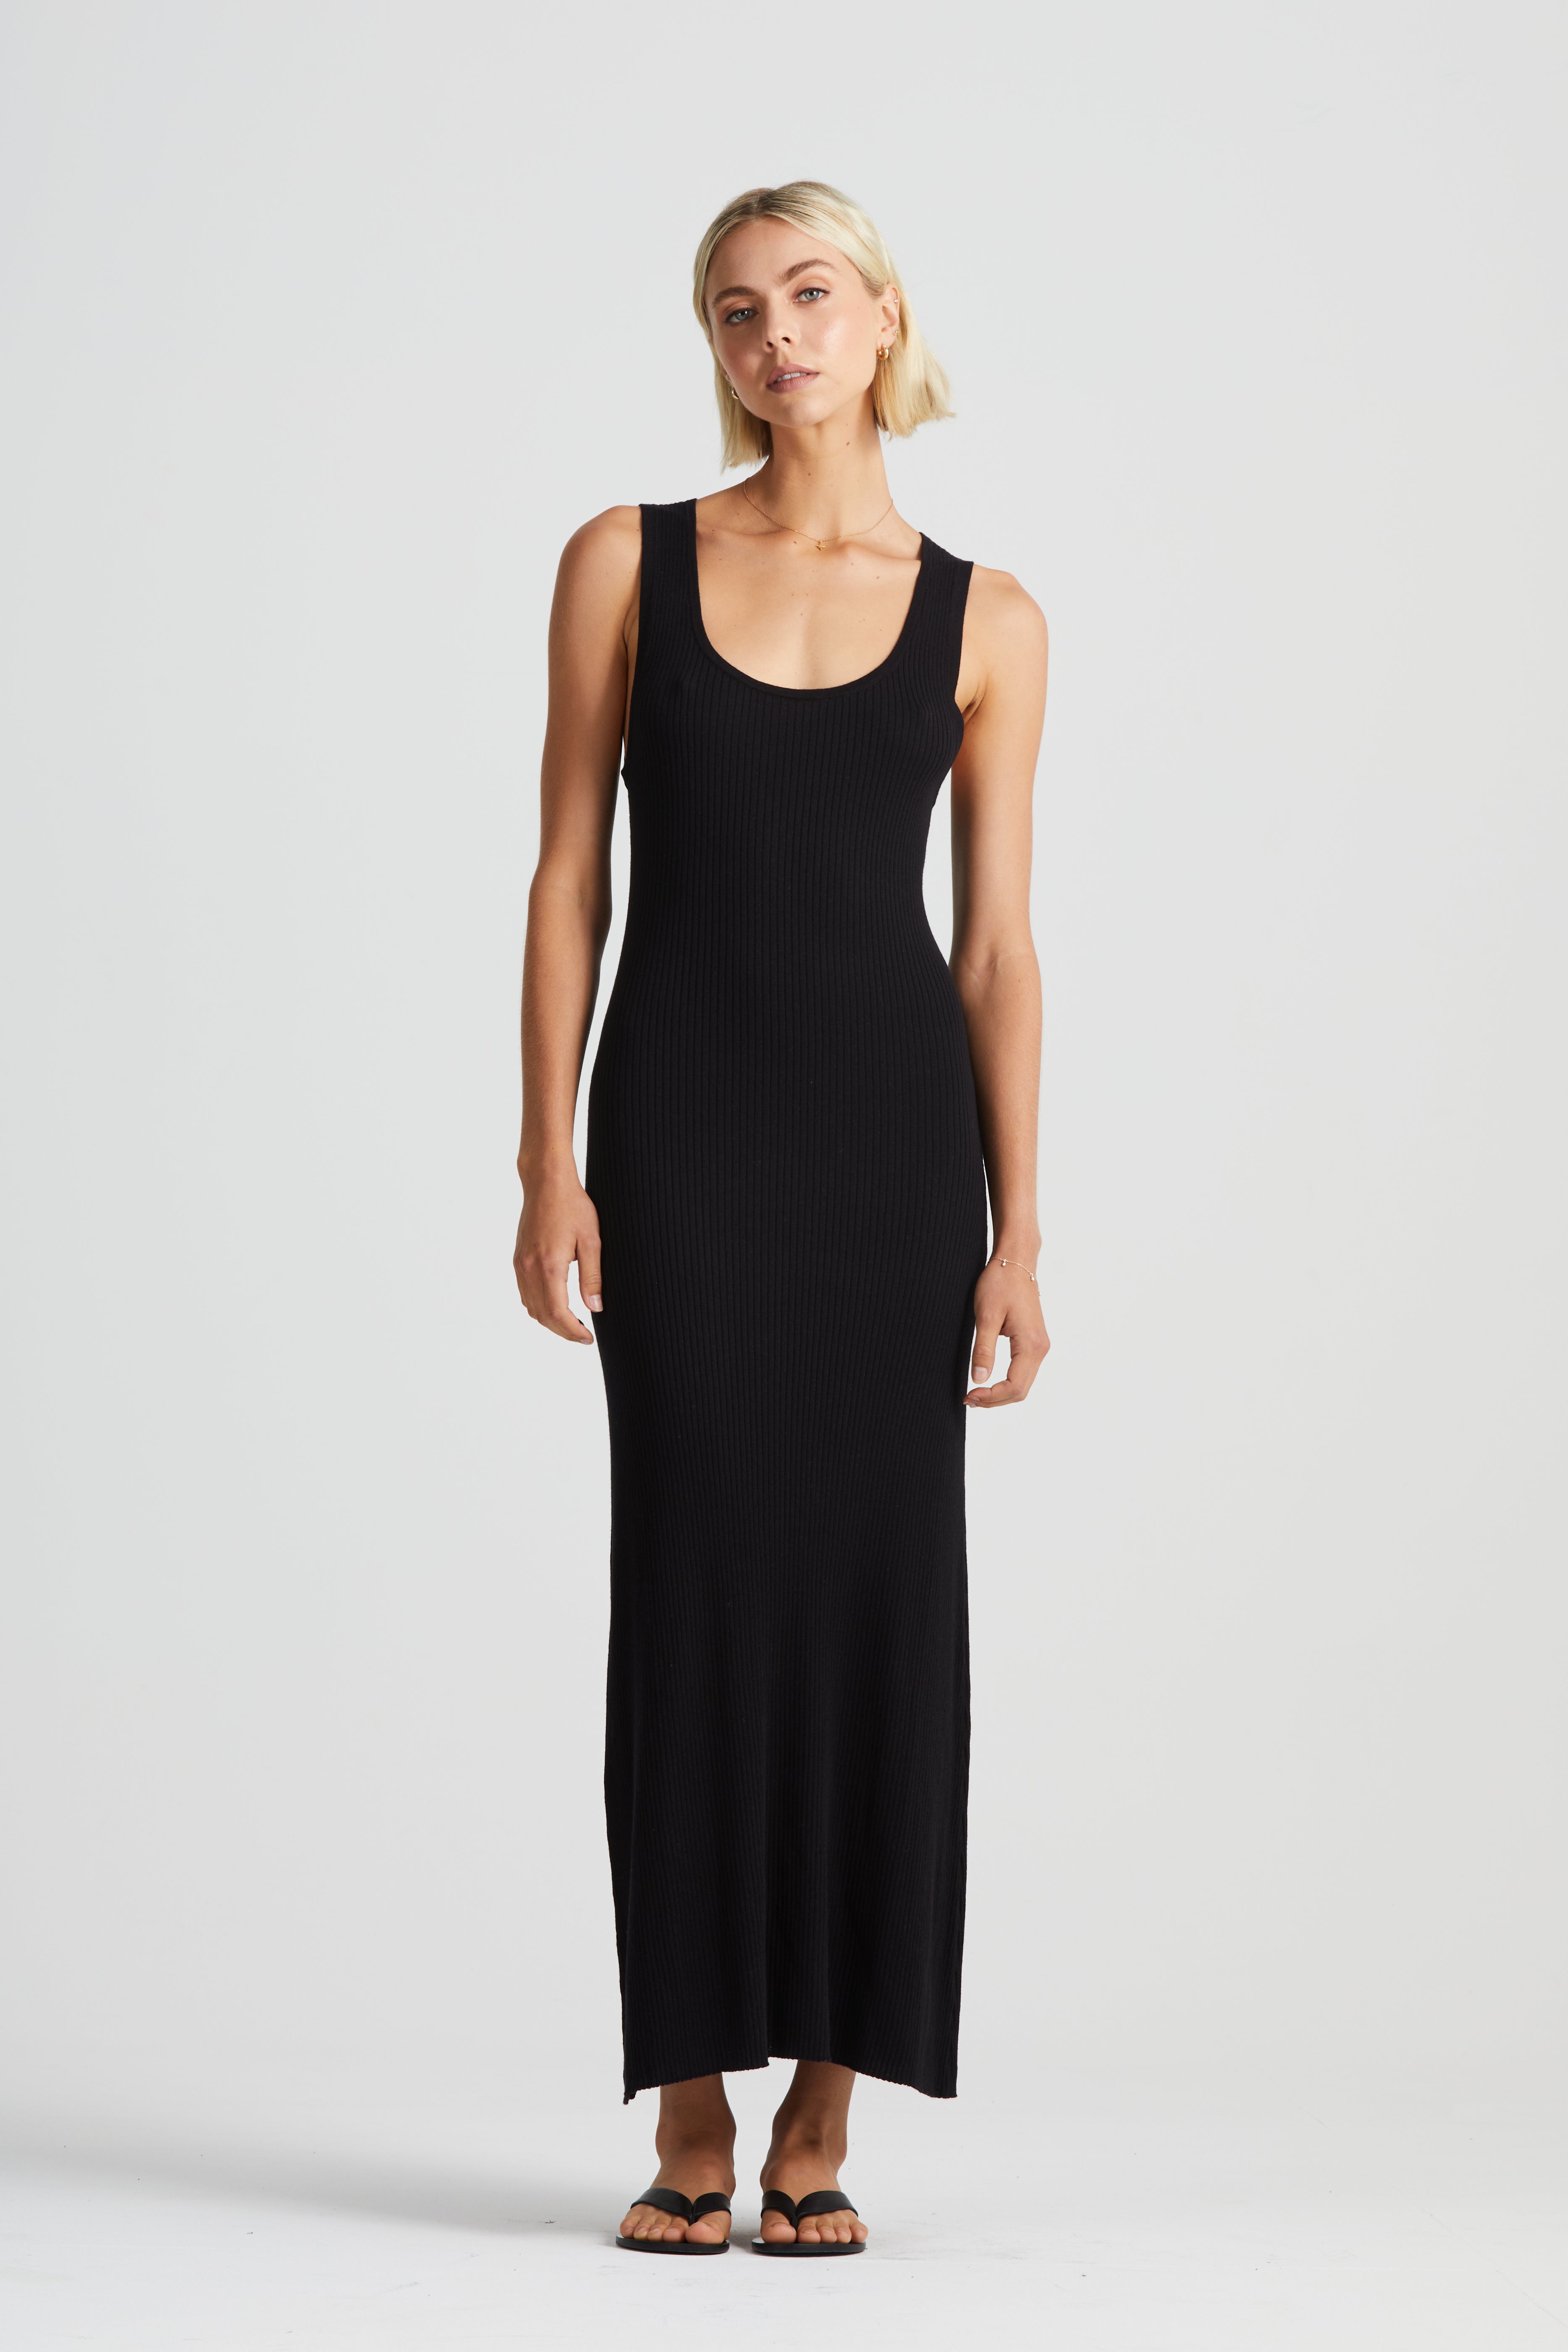 The Linear Sleeveless Knit Dress | Black $360